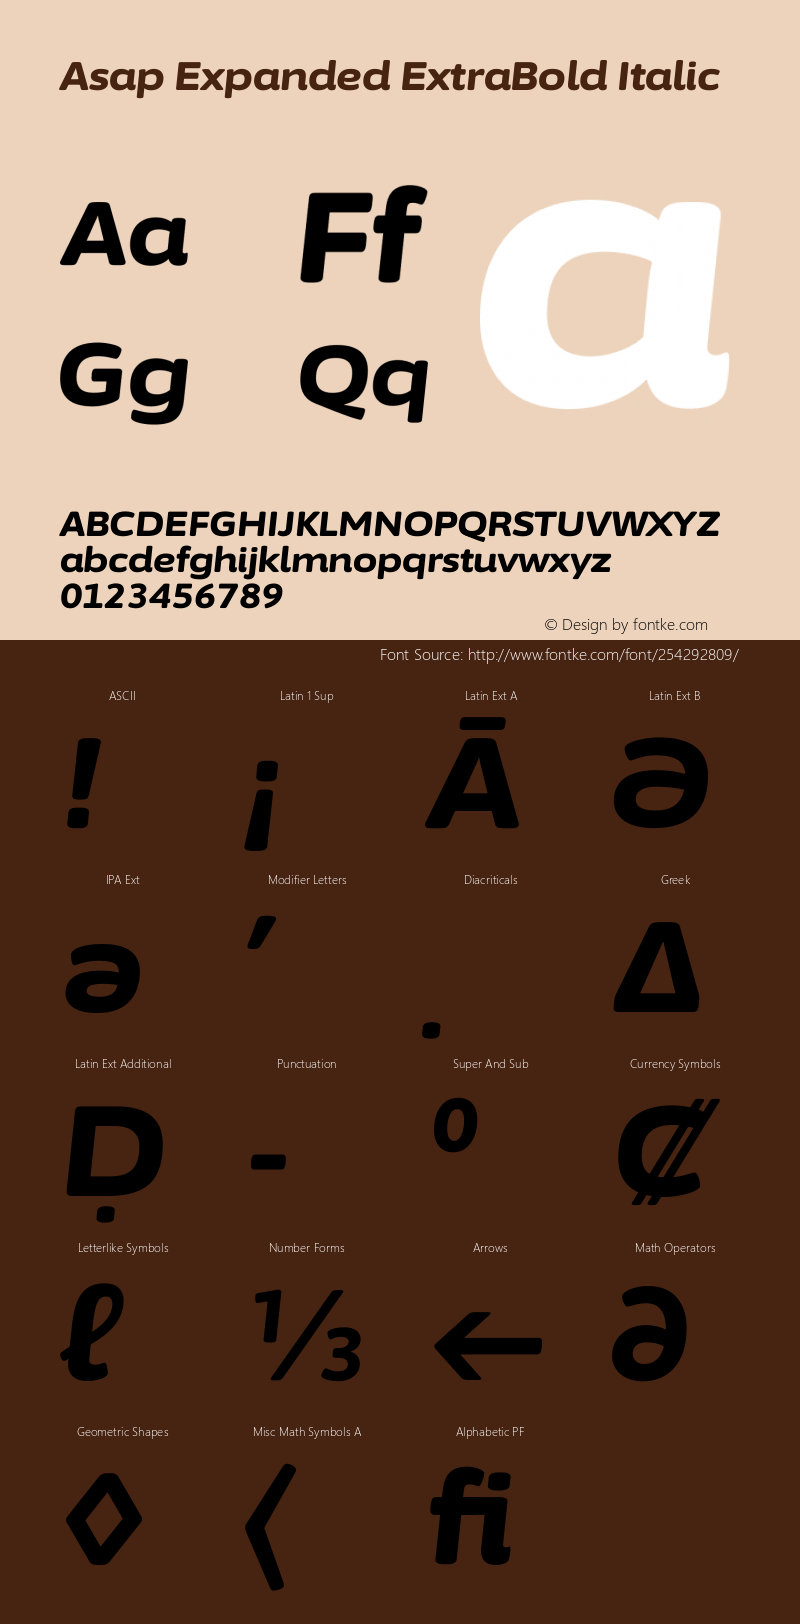 Asap Expanded ExtraBold Italic Version 3.001图片样张